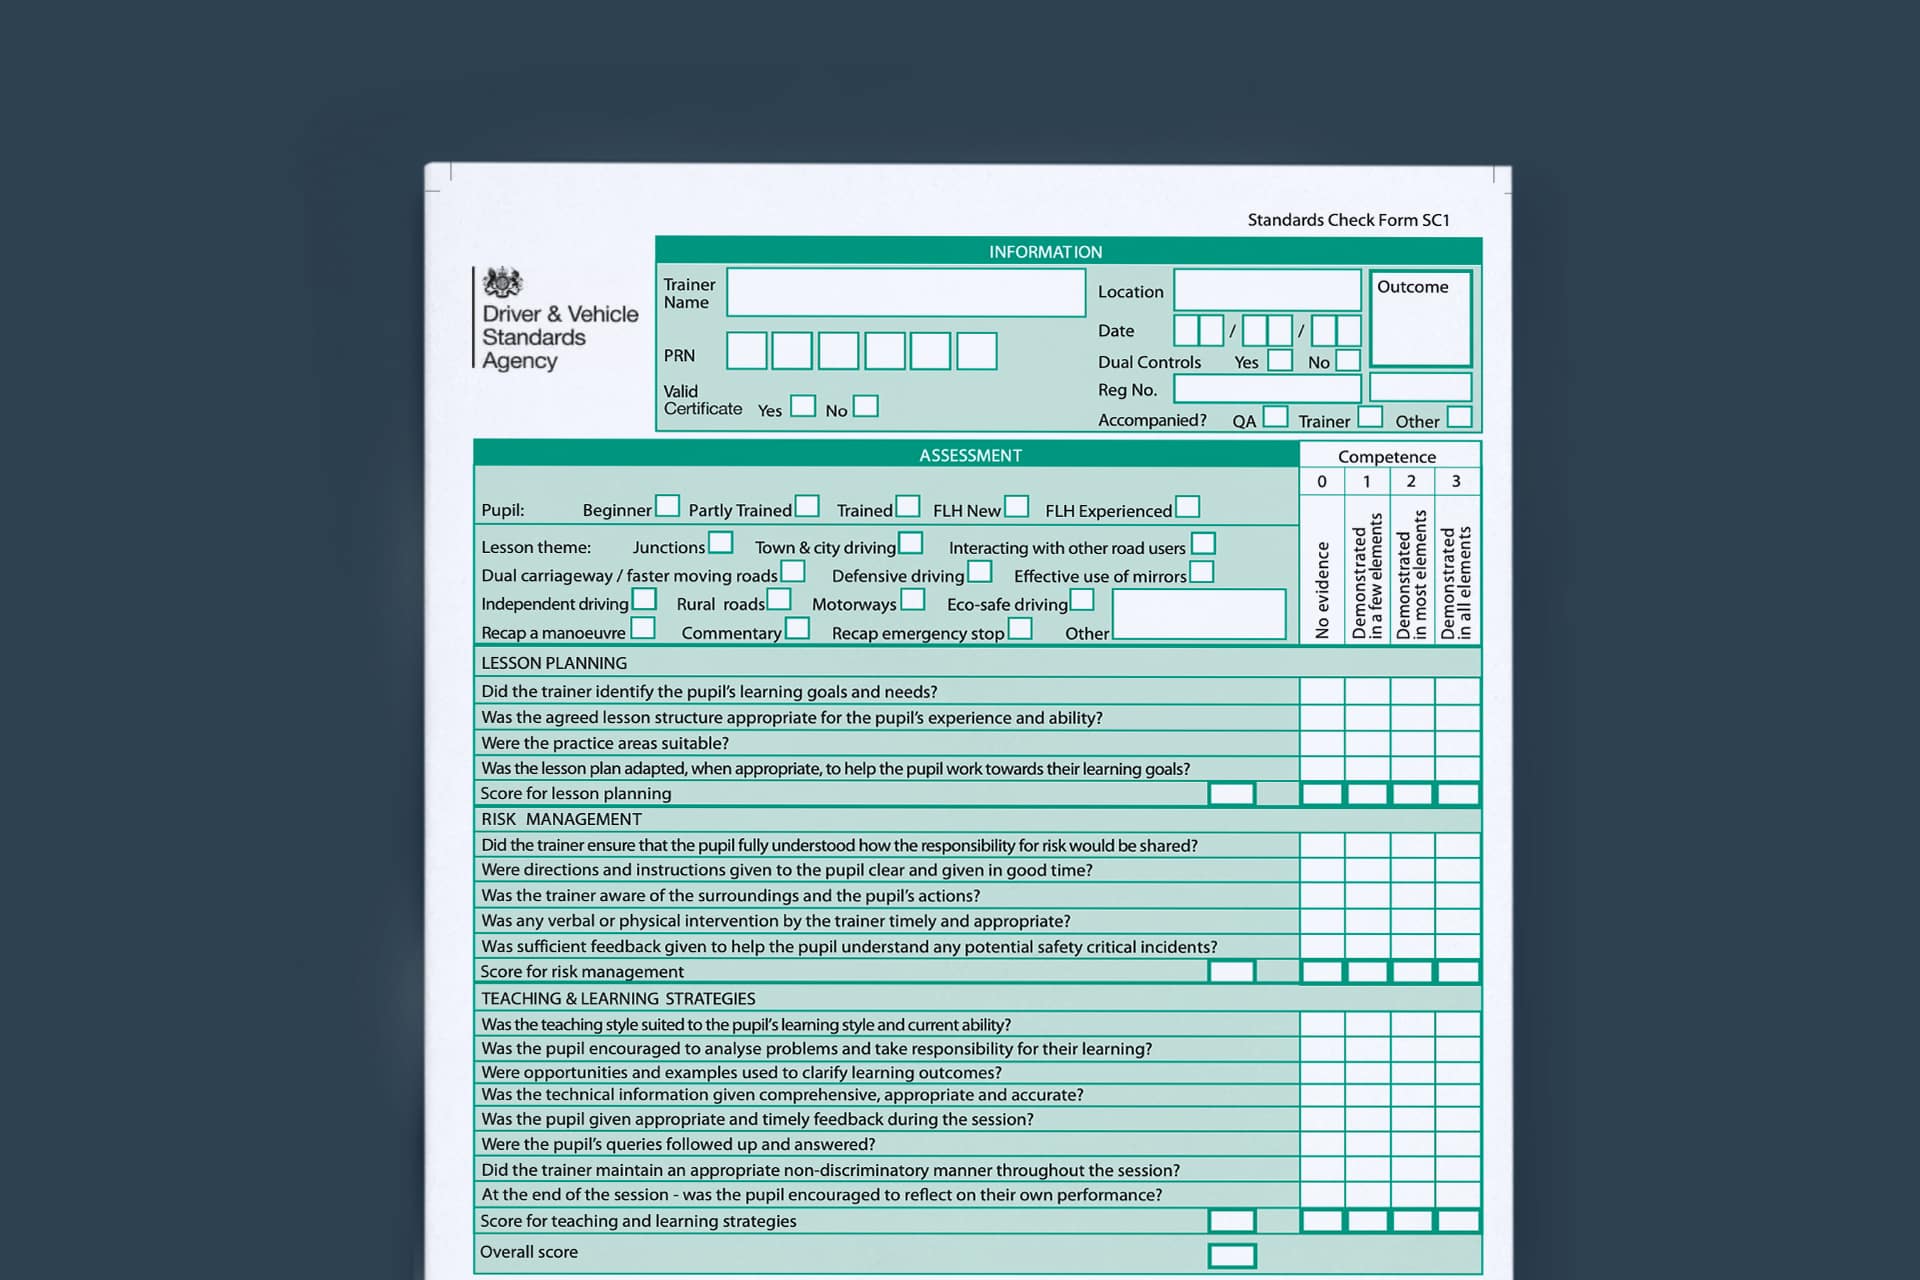 Standards Check Form SC1